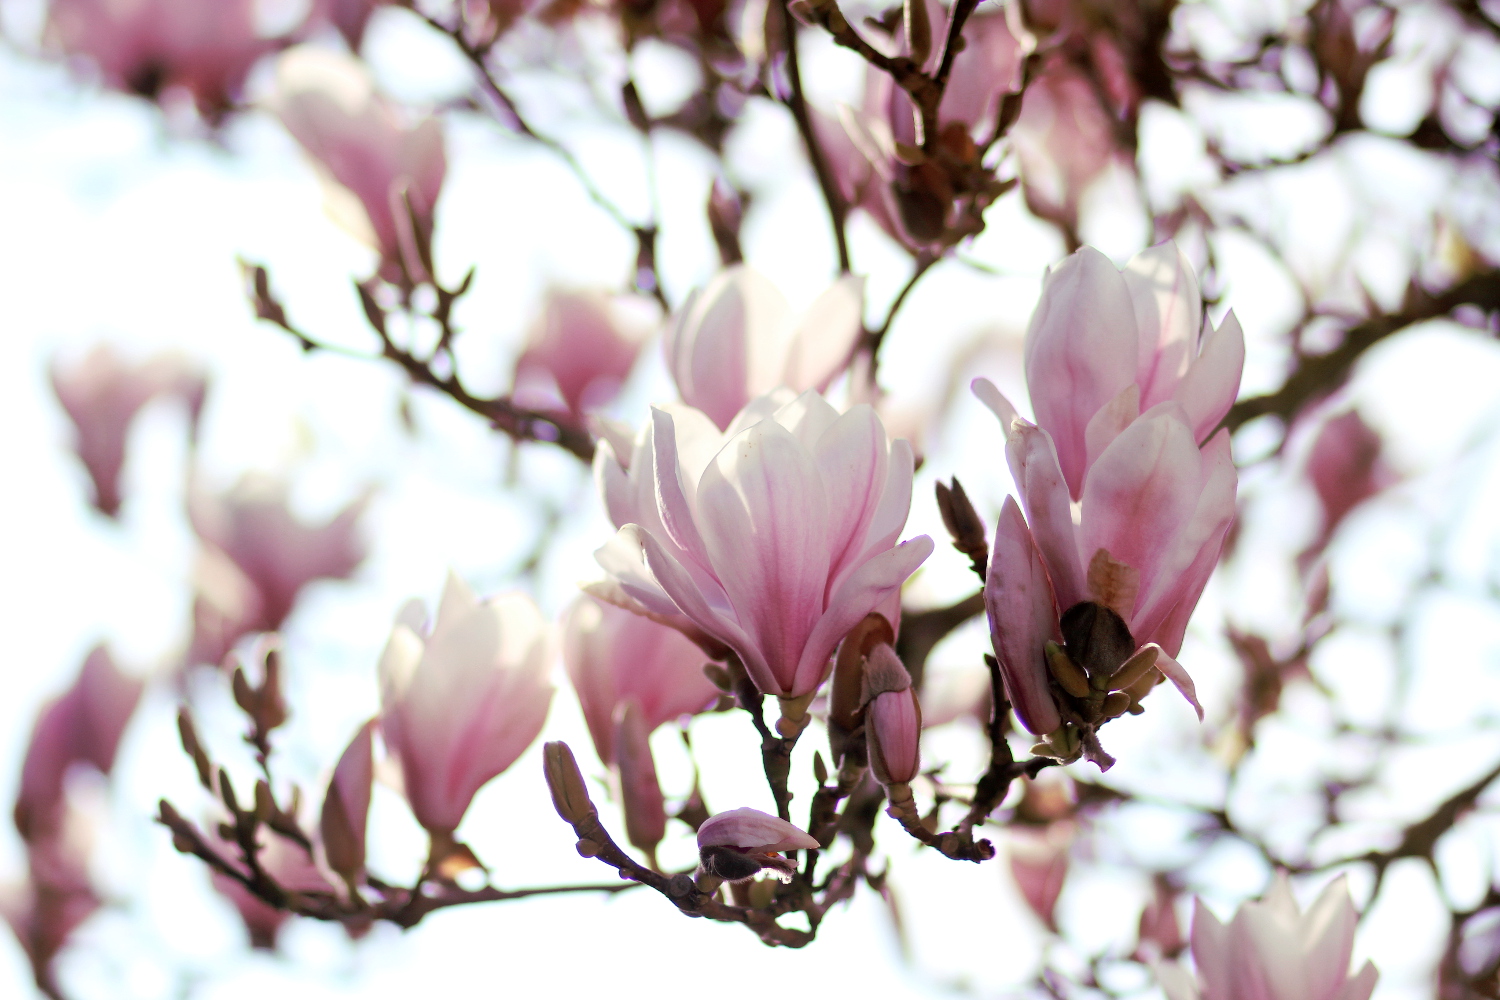 Bezaubernde Nana, bezauberndenana.de, April Favoriten, Magnolien, Frühling, Blüten